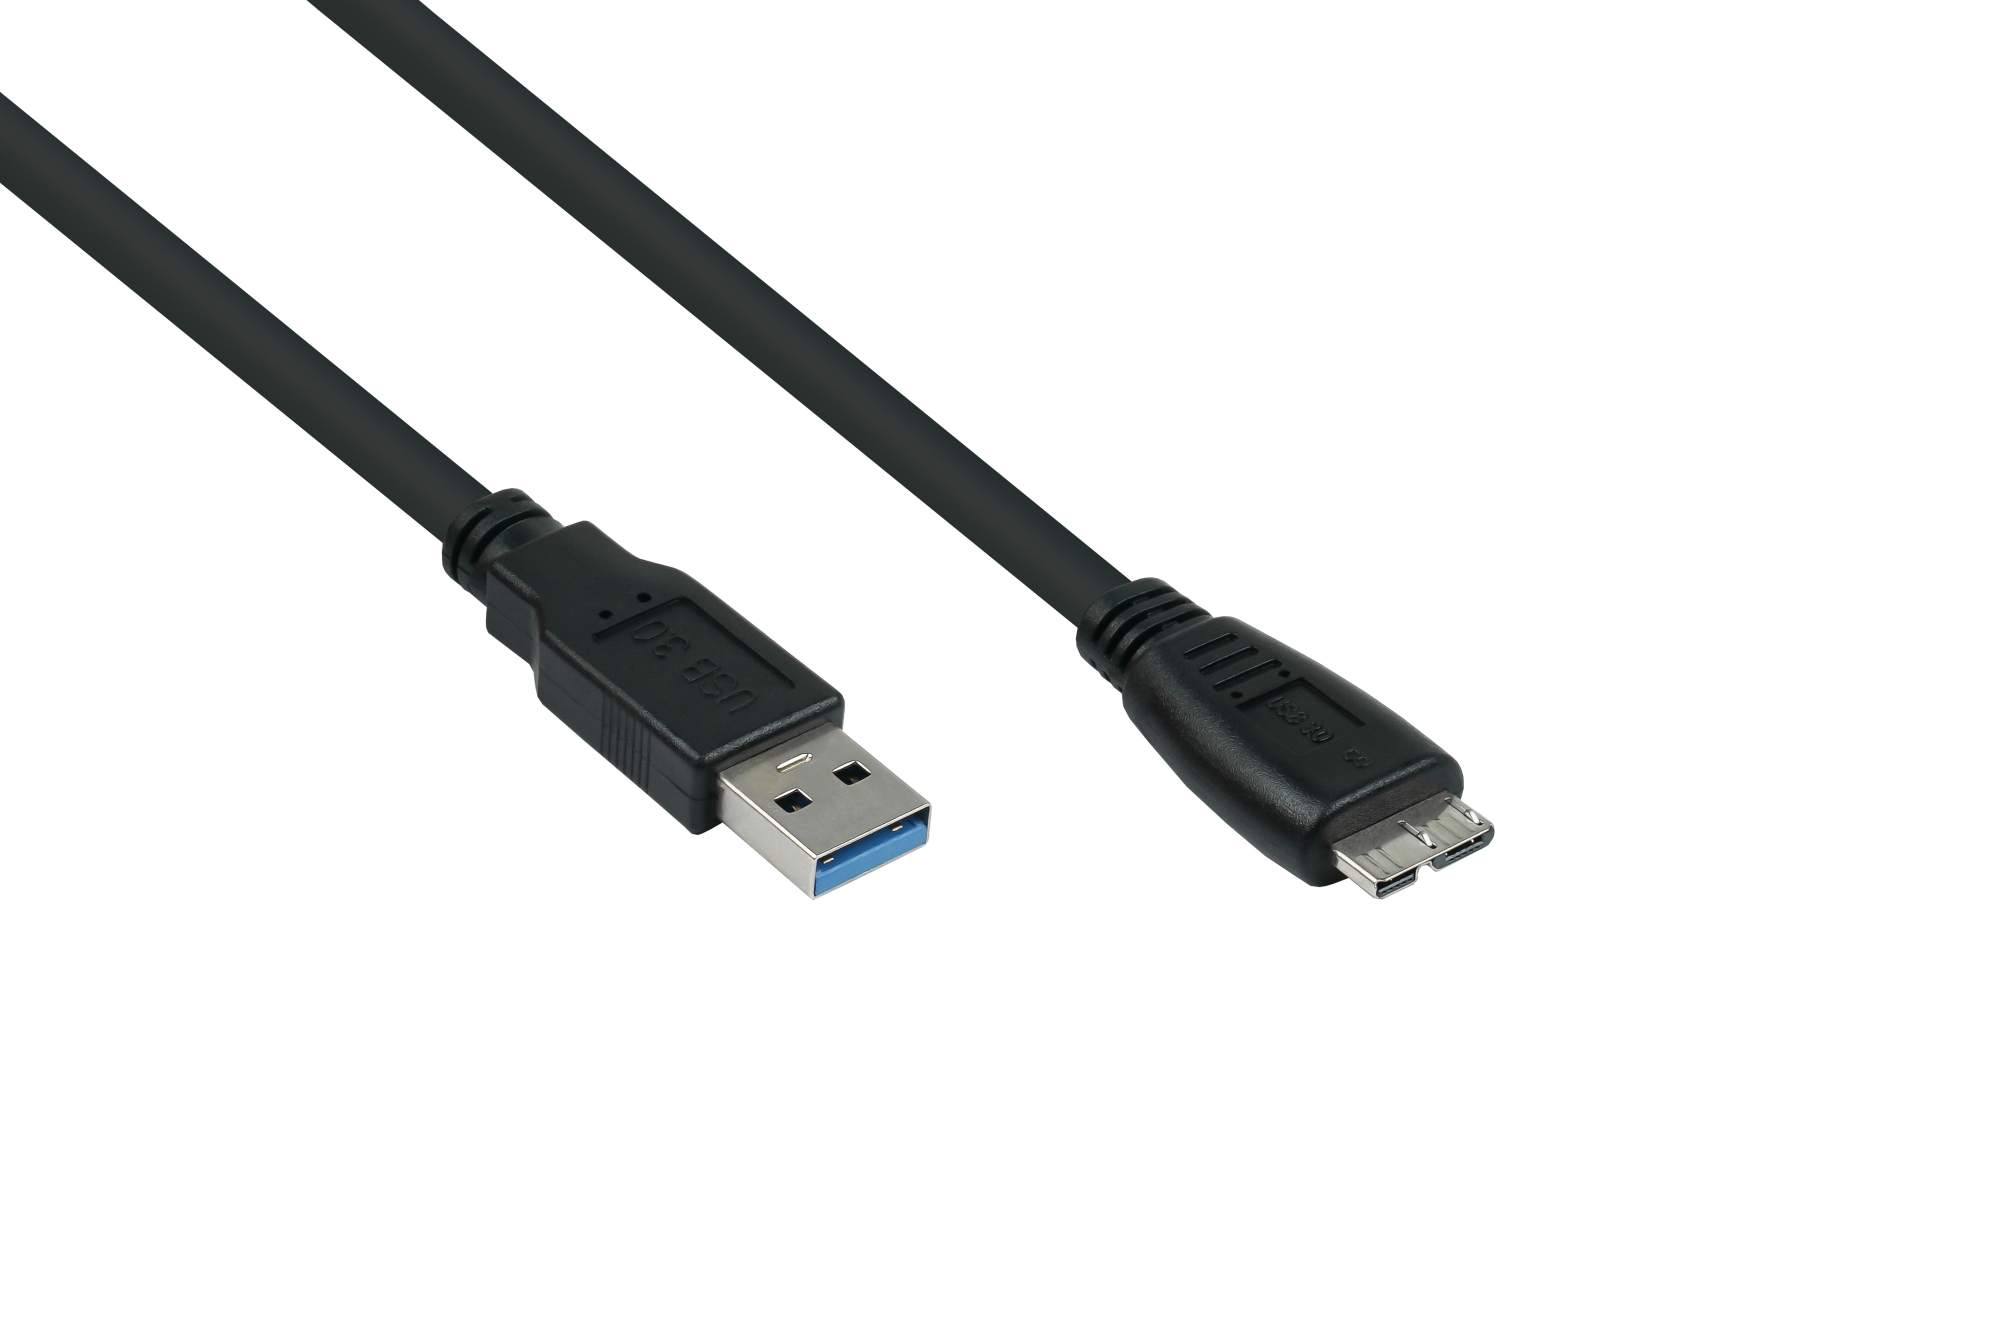 USB 3.0 Kabel Stecker A an Stecker Micro B, Premium, AWG28 / AWG24, UL, KUPFER, schwarz, 5m